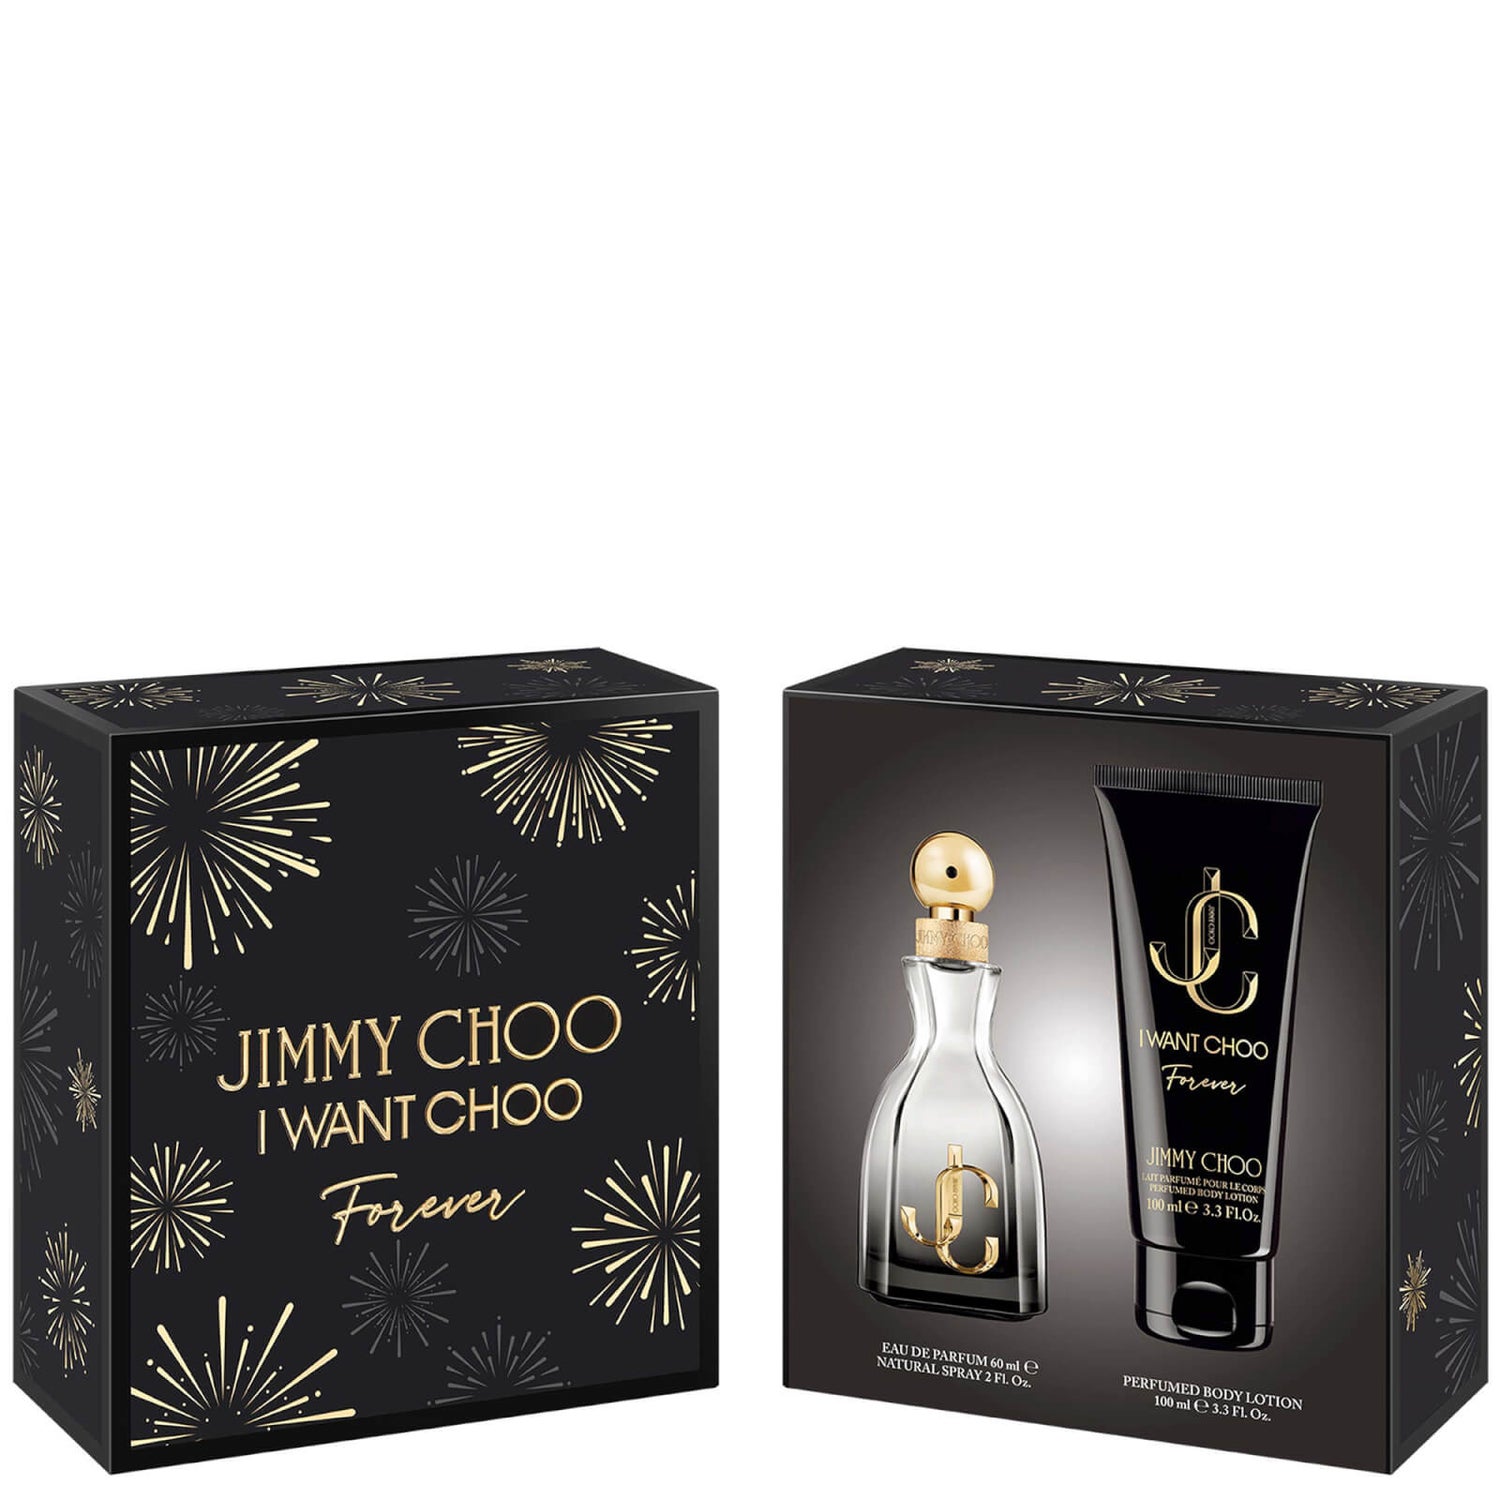 Jimmy Choo I Want Choo Forever Eau De Parfum and Body Lotion Set